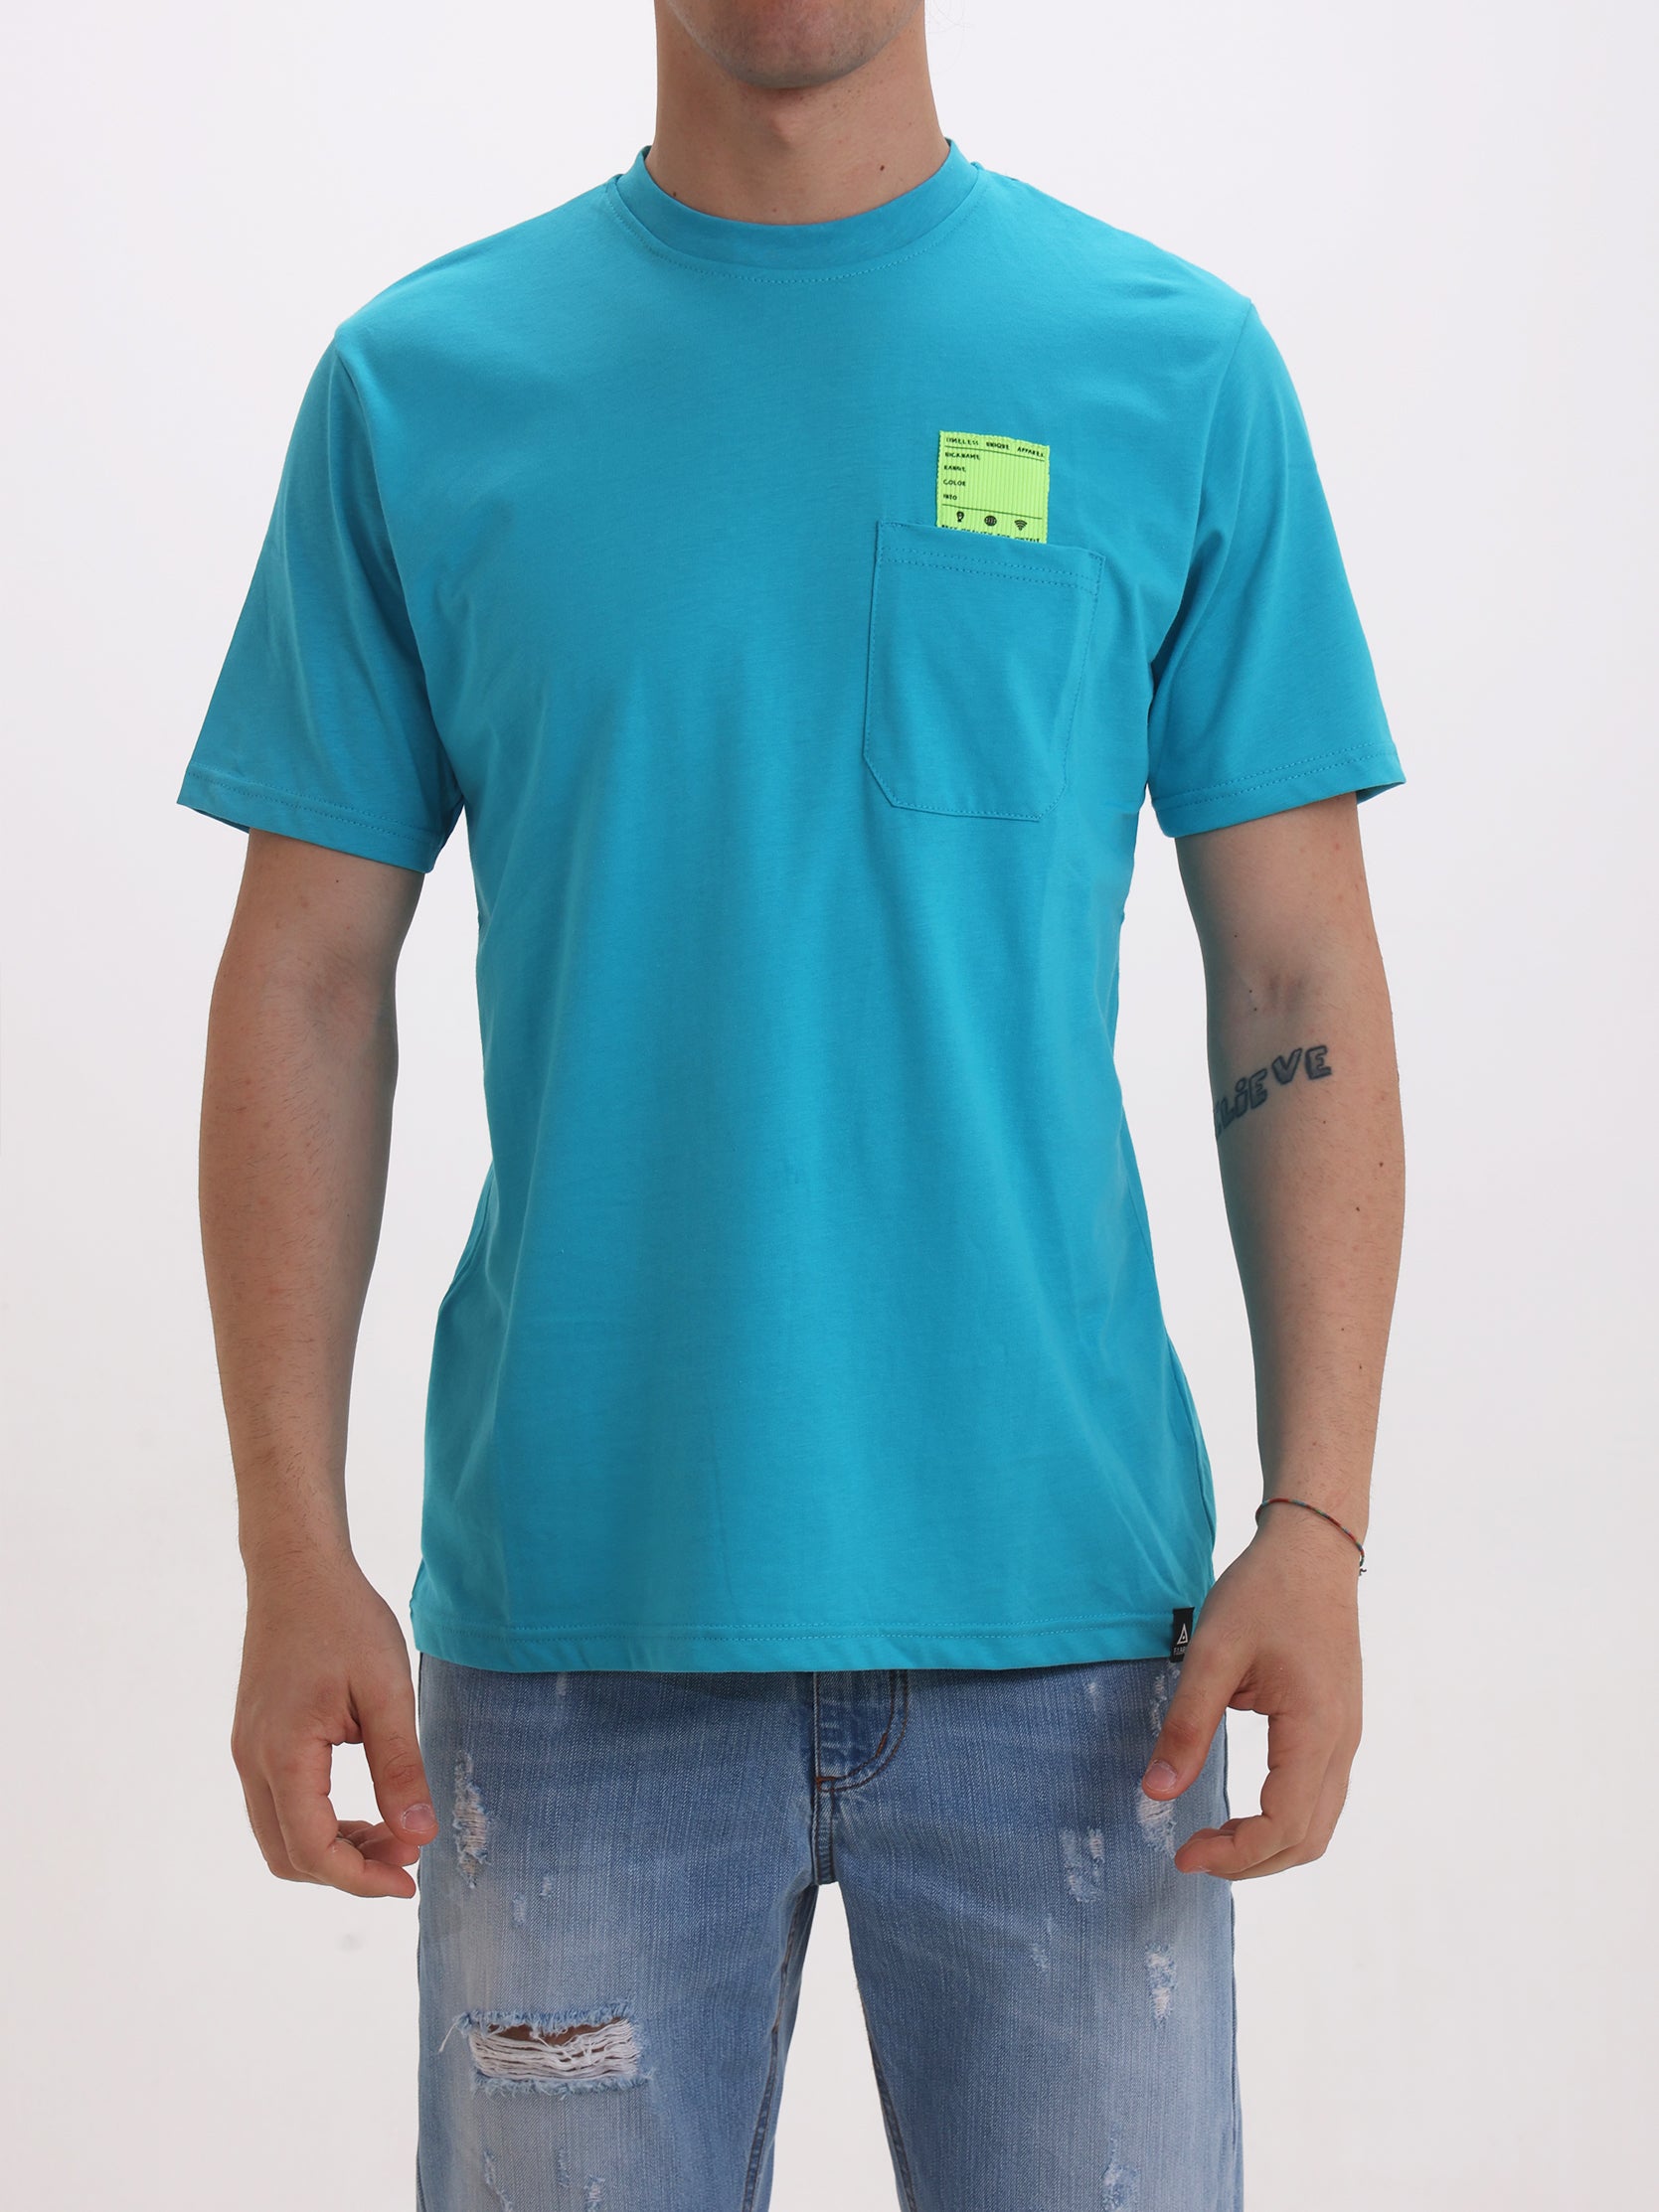 Fabrik Uomo T-shirt Azzurro Smeraldo M1ELIO03